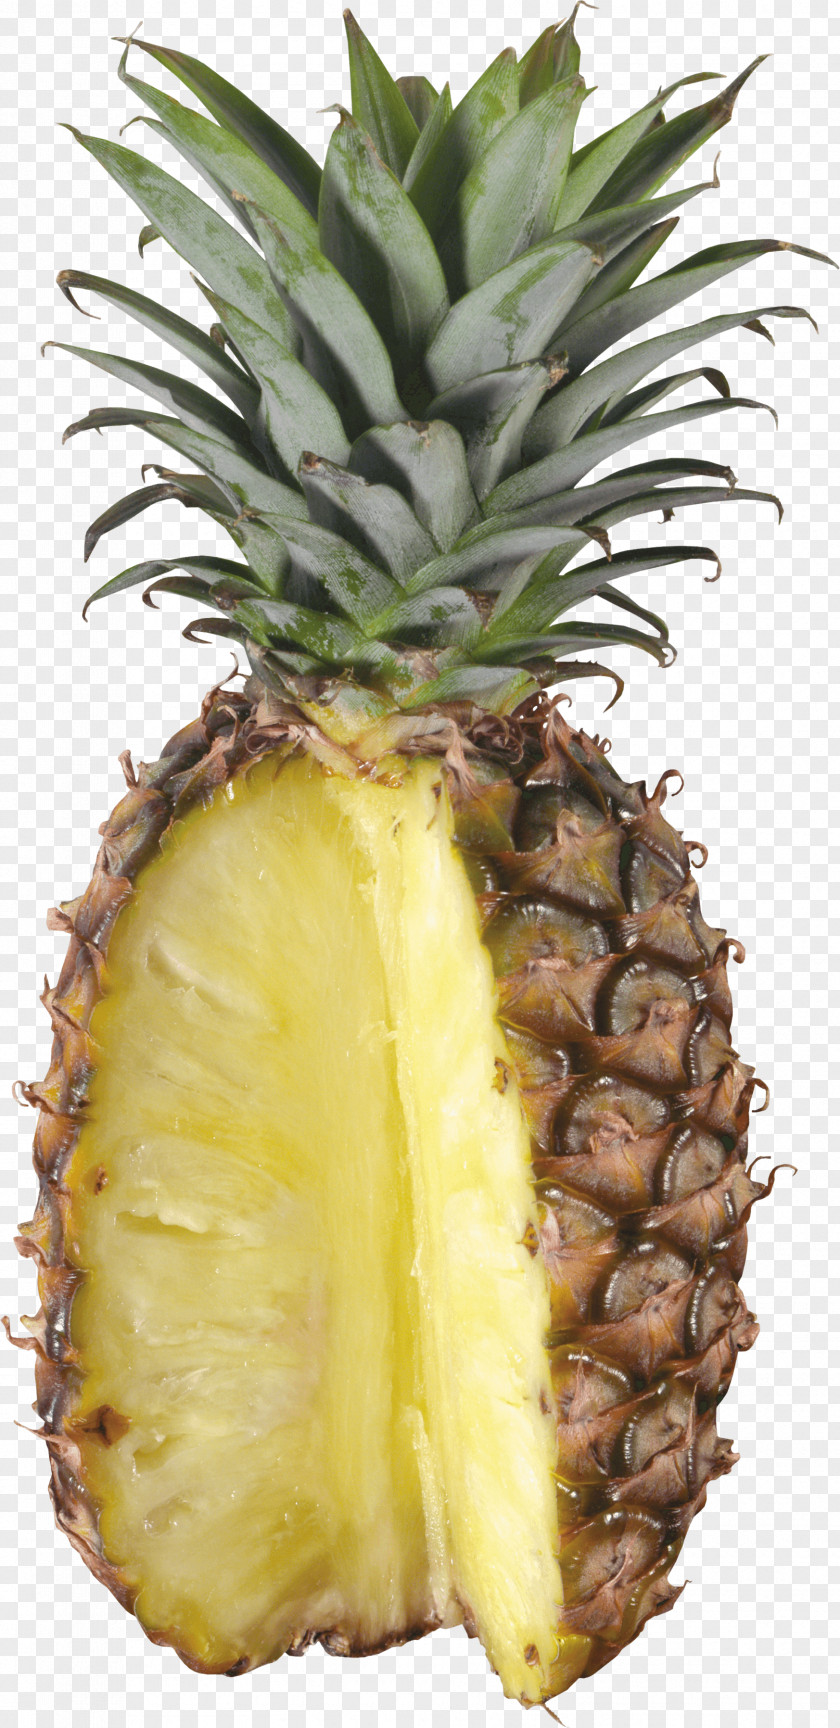 Pineapple Image Download Jungle Juice Smoothie Milkshake Rum Baba PNG